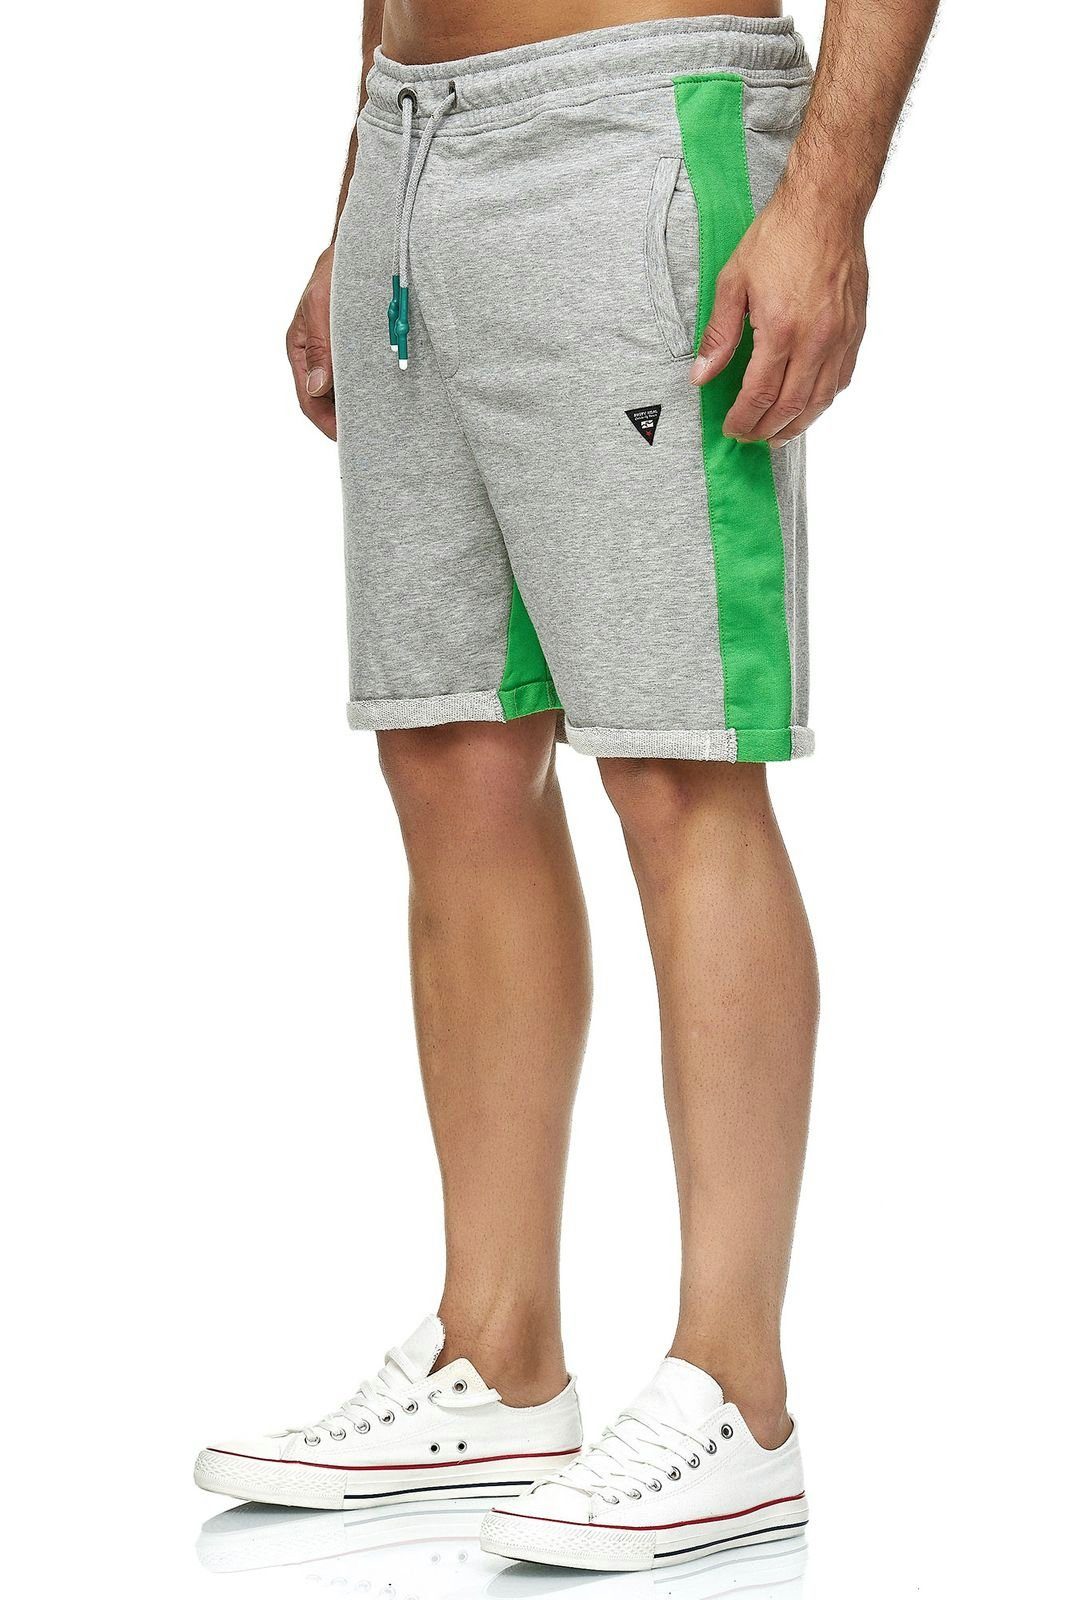 Shorts mit bequemem grau, Rusty Neal Tragekomfort grün